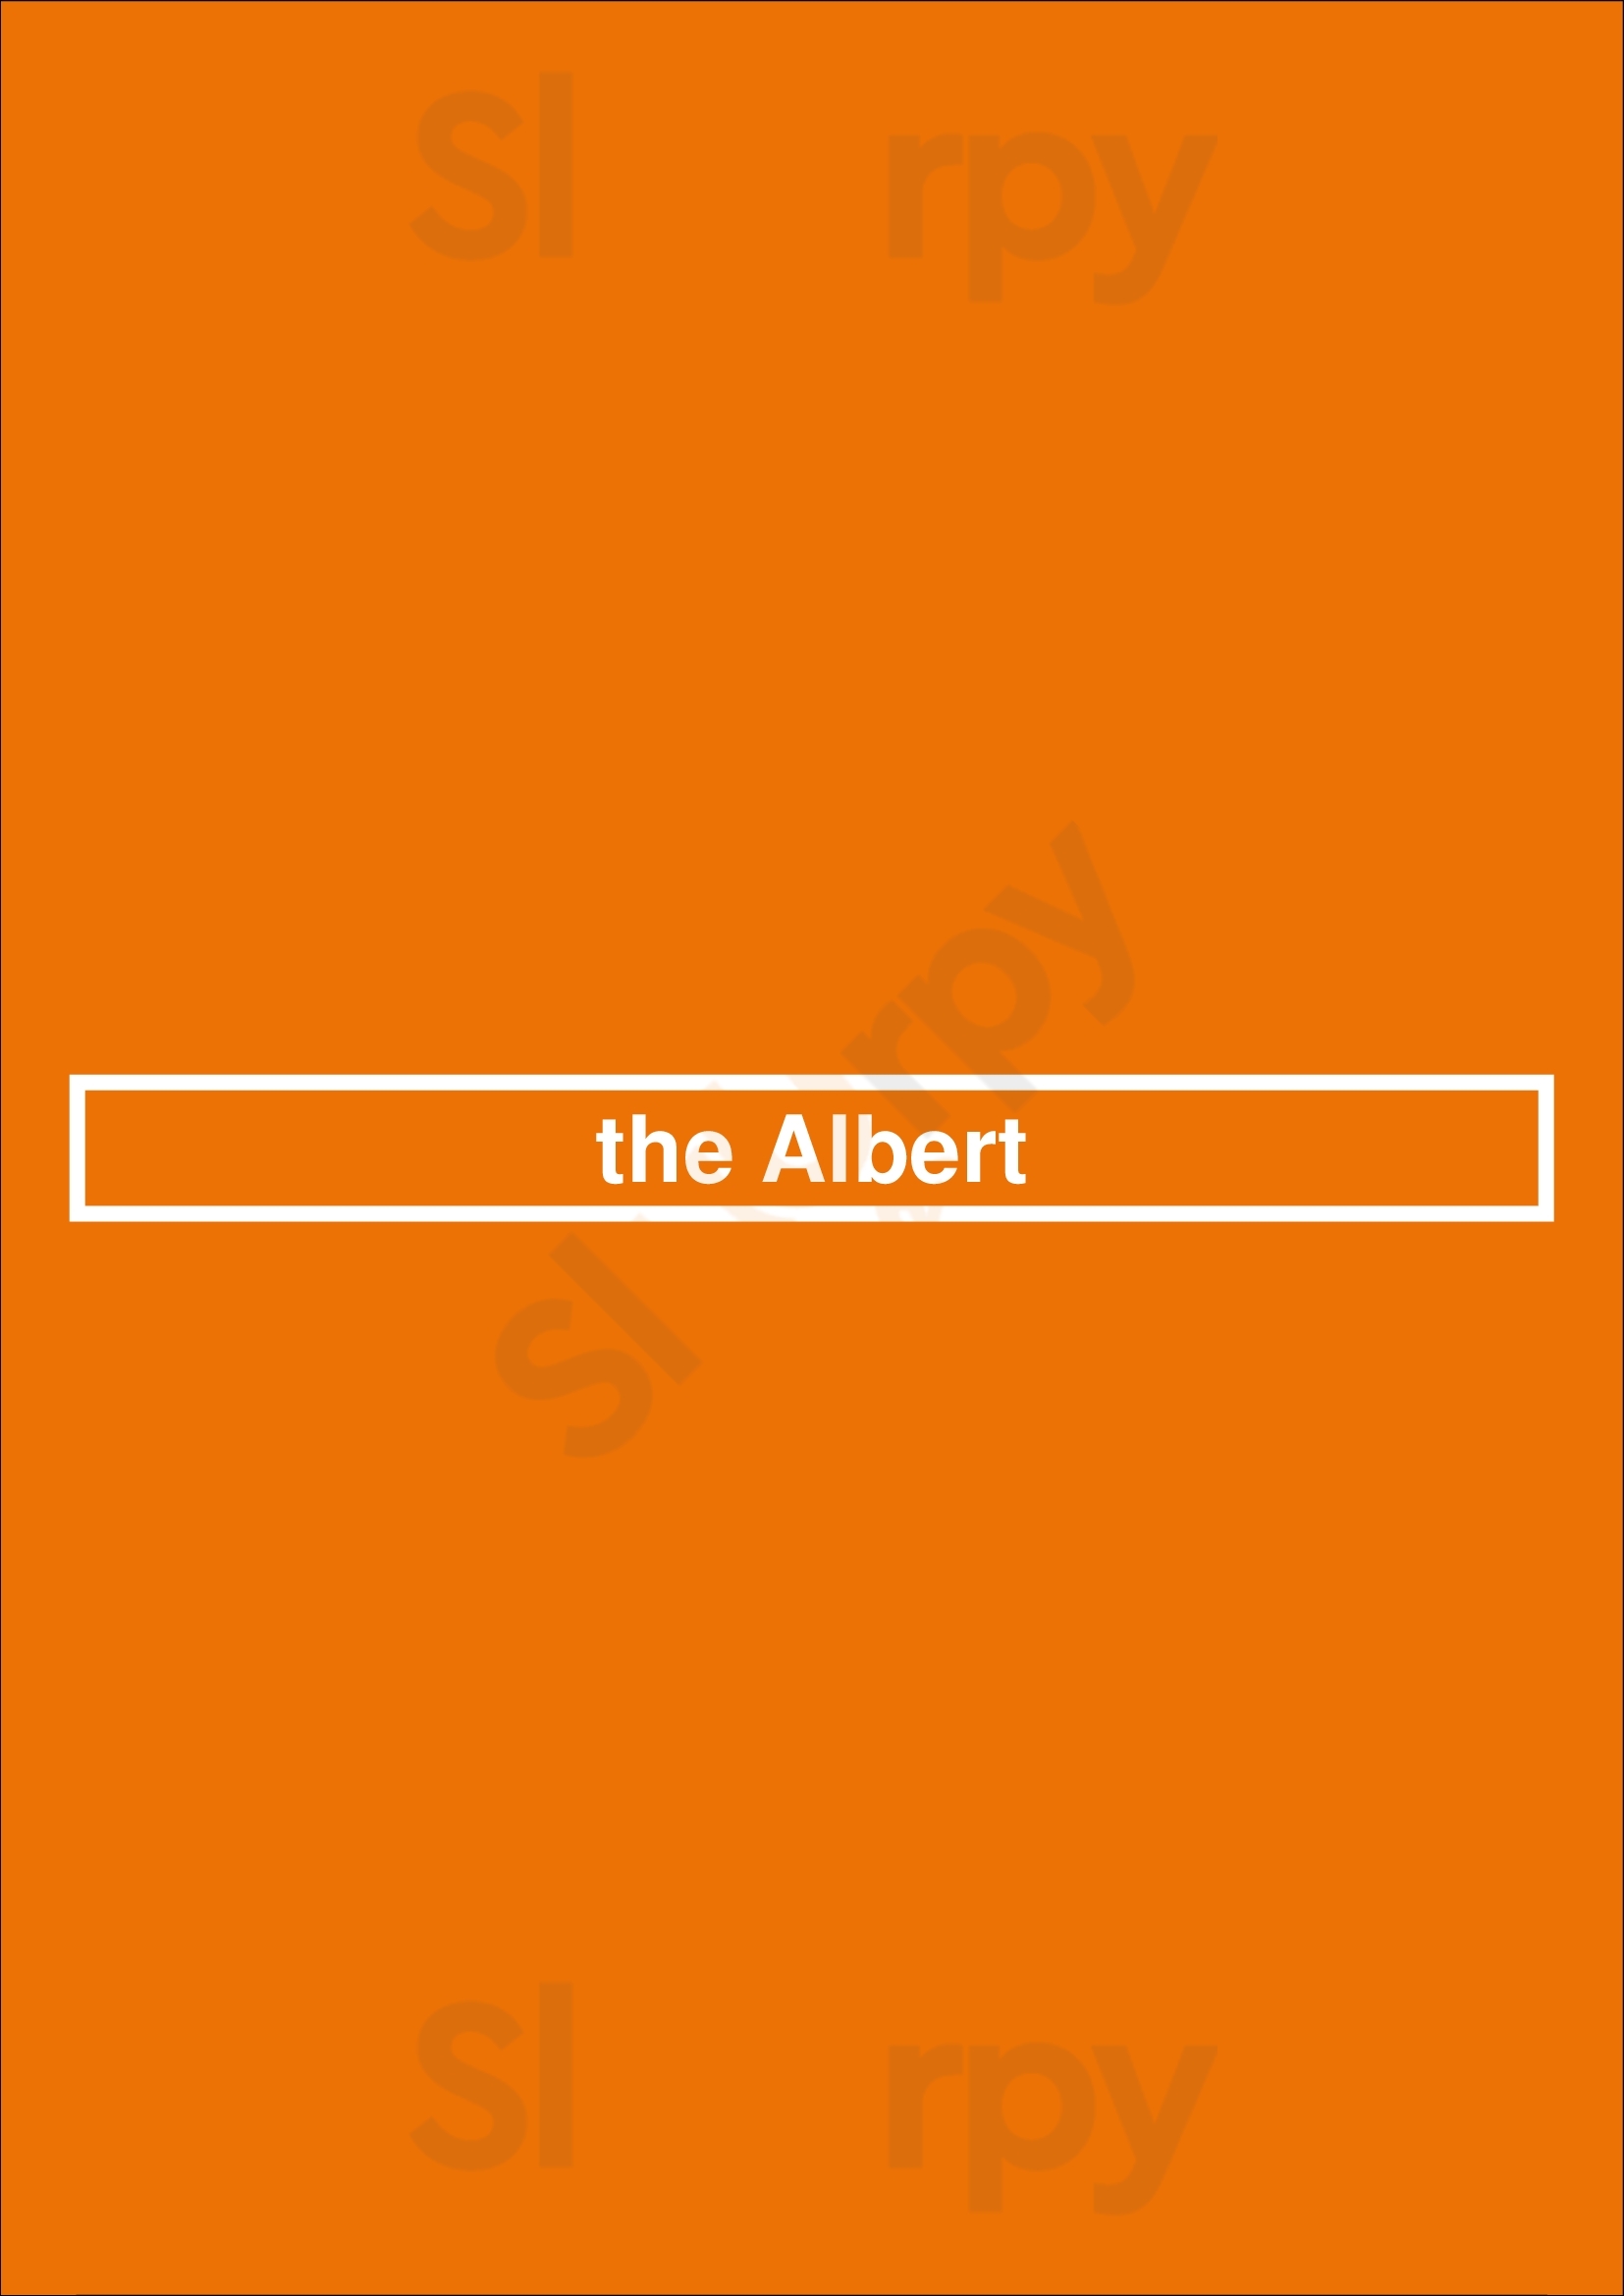 The Albert Chicago Menu - 1